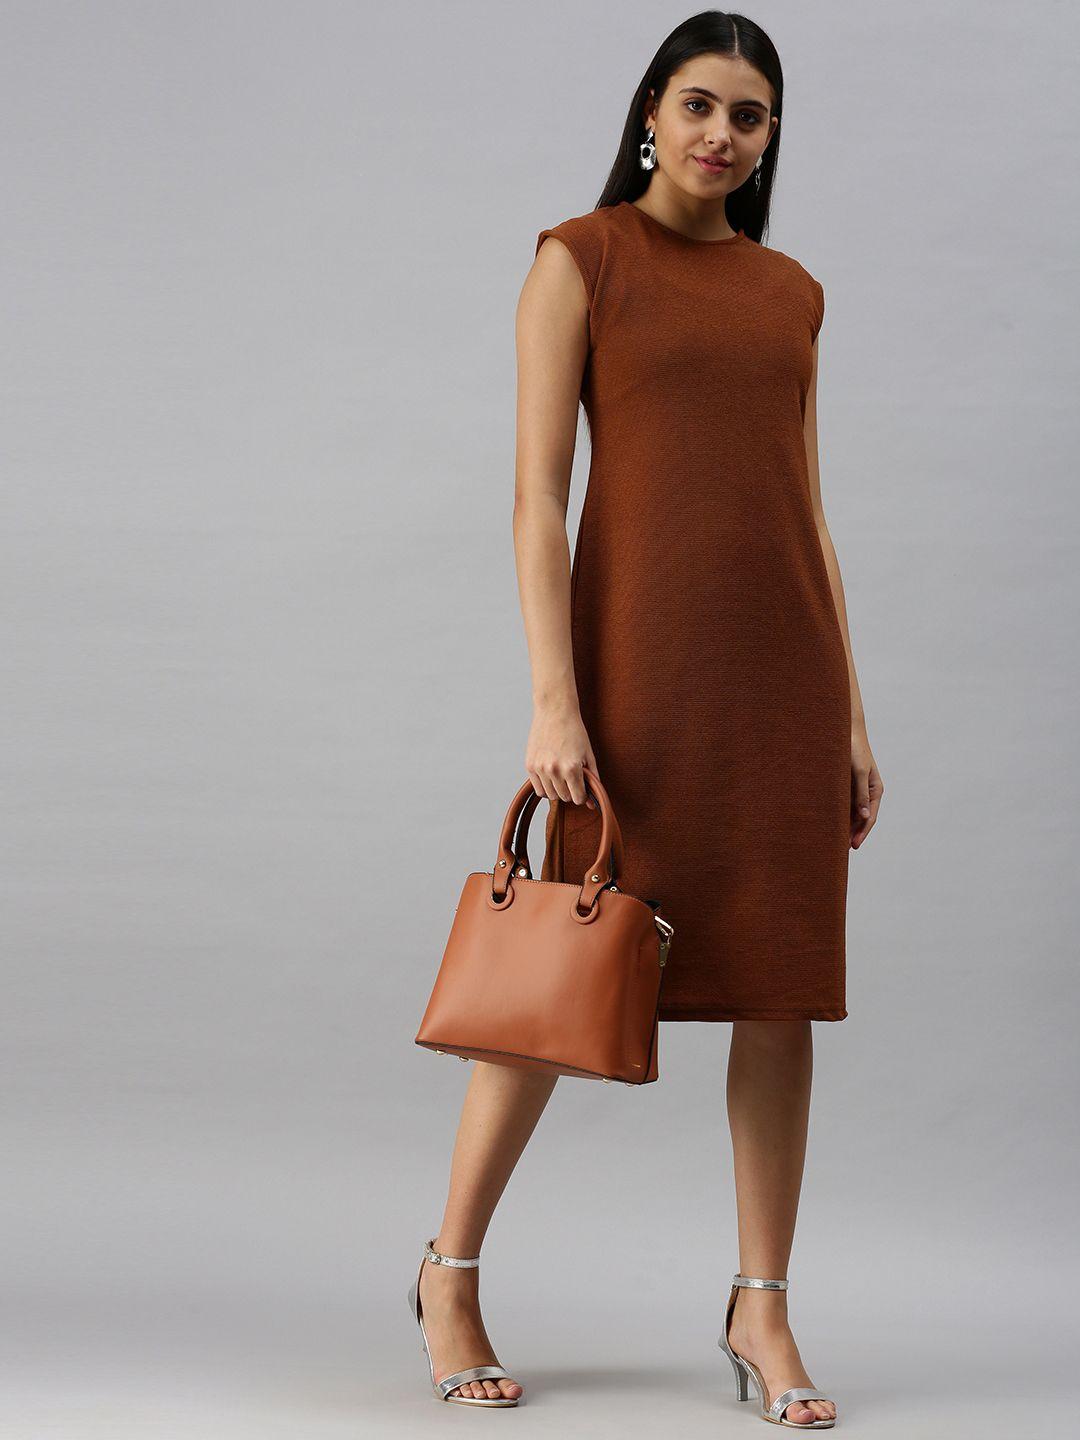 showoff brown solid sheath dress